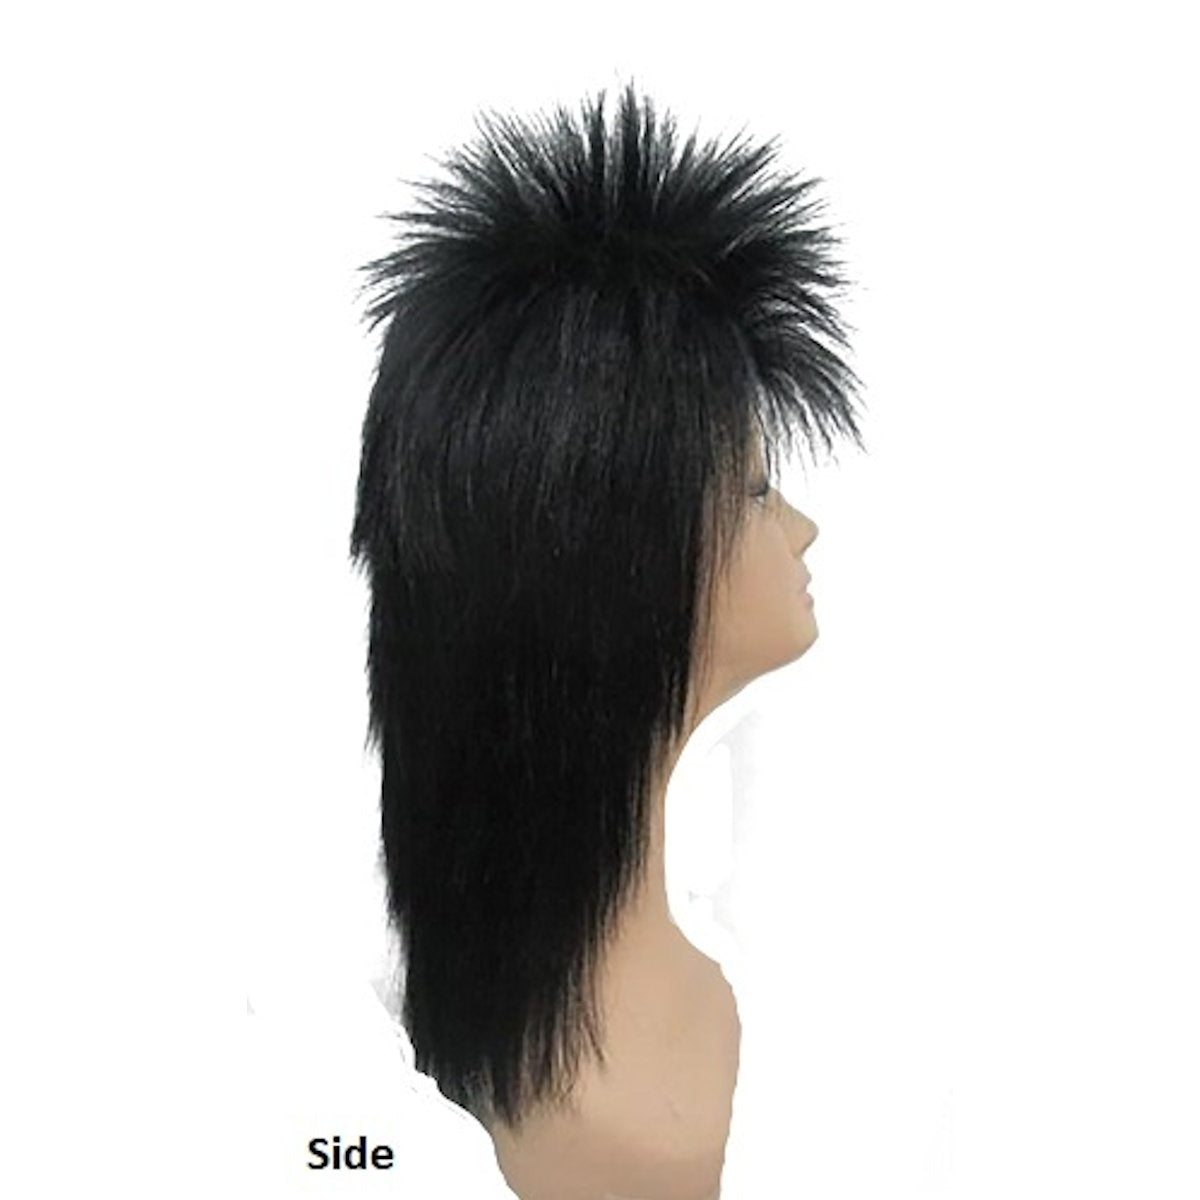 80's Spiky Poita Black Mullet Rock Star WIG Men's Costume Wig